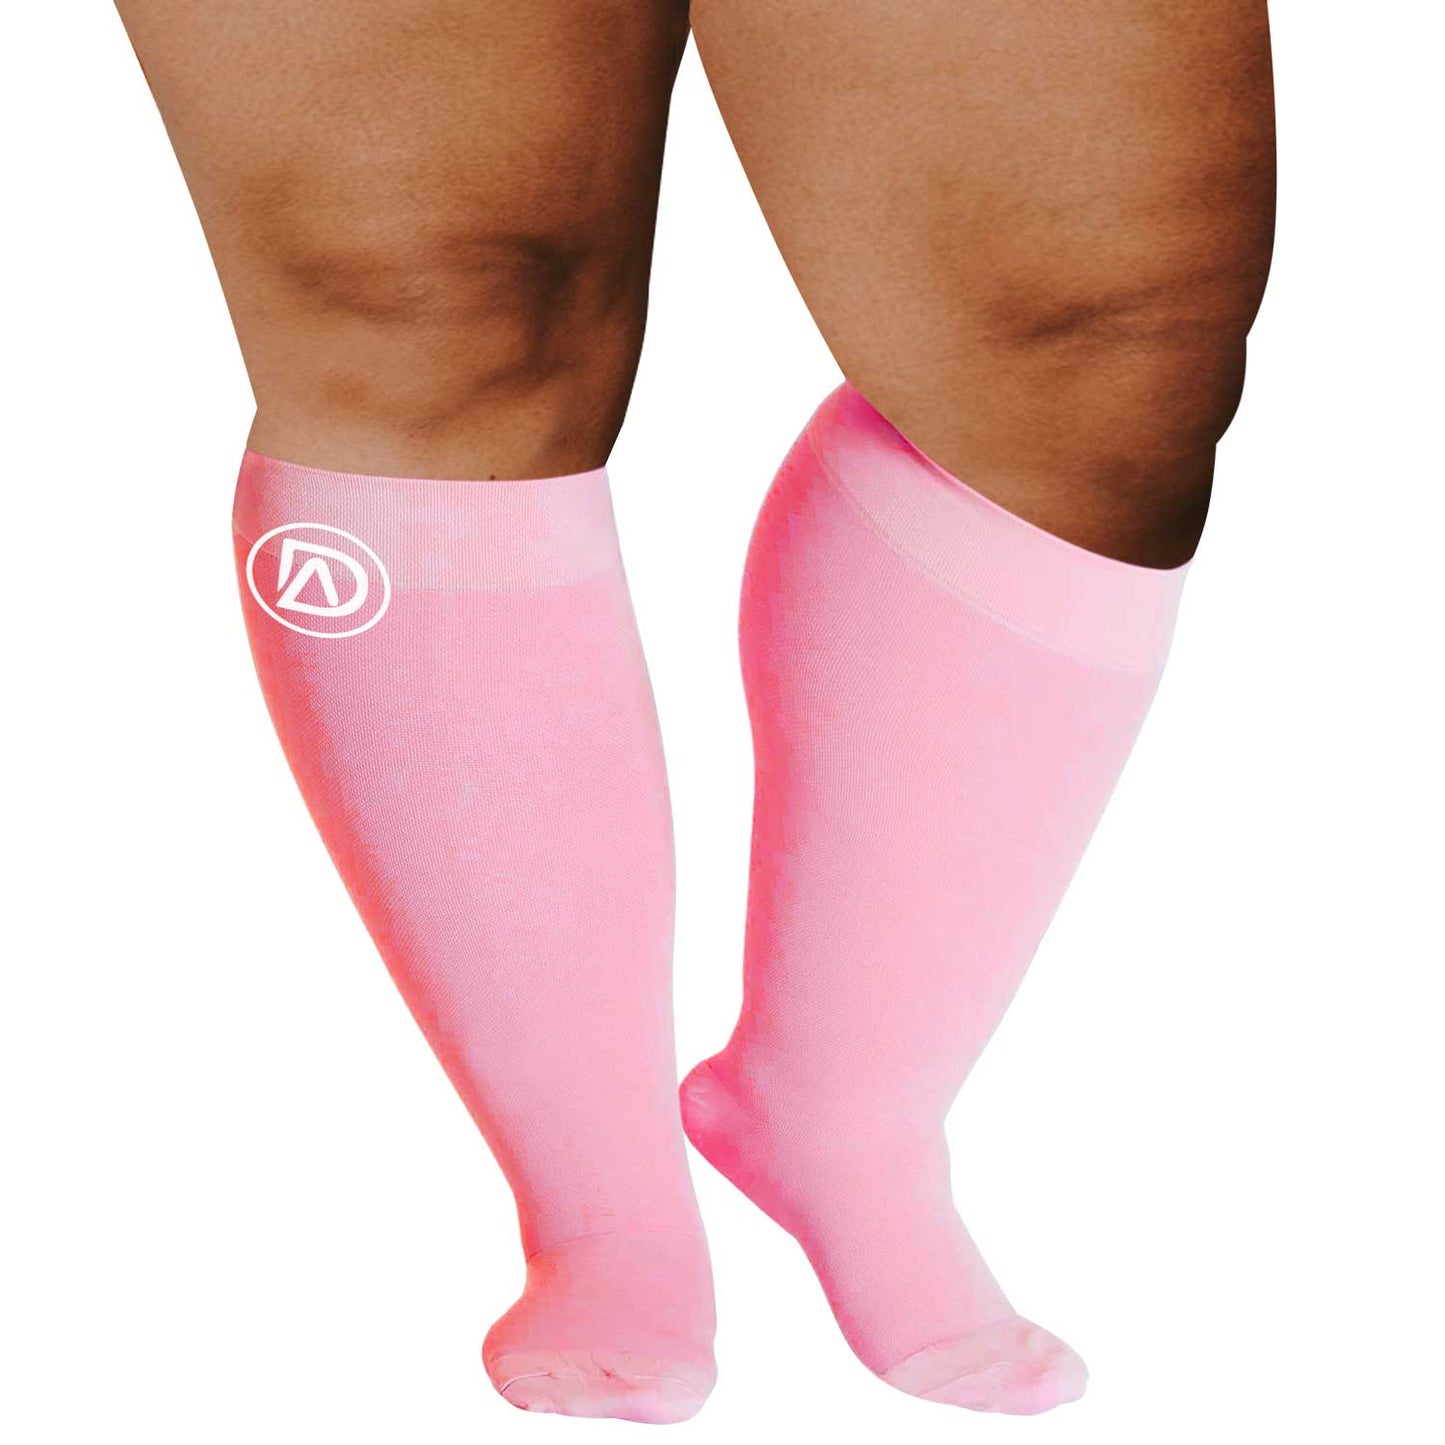 Bundle A (1 Pair Socks) 20-30 mmHg